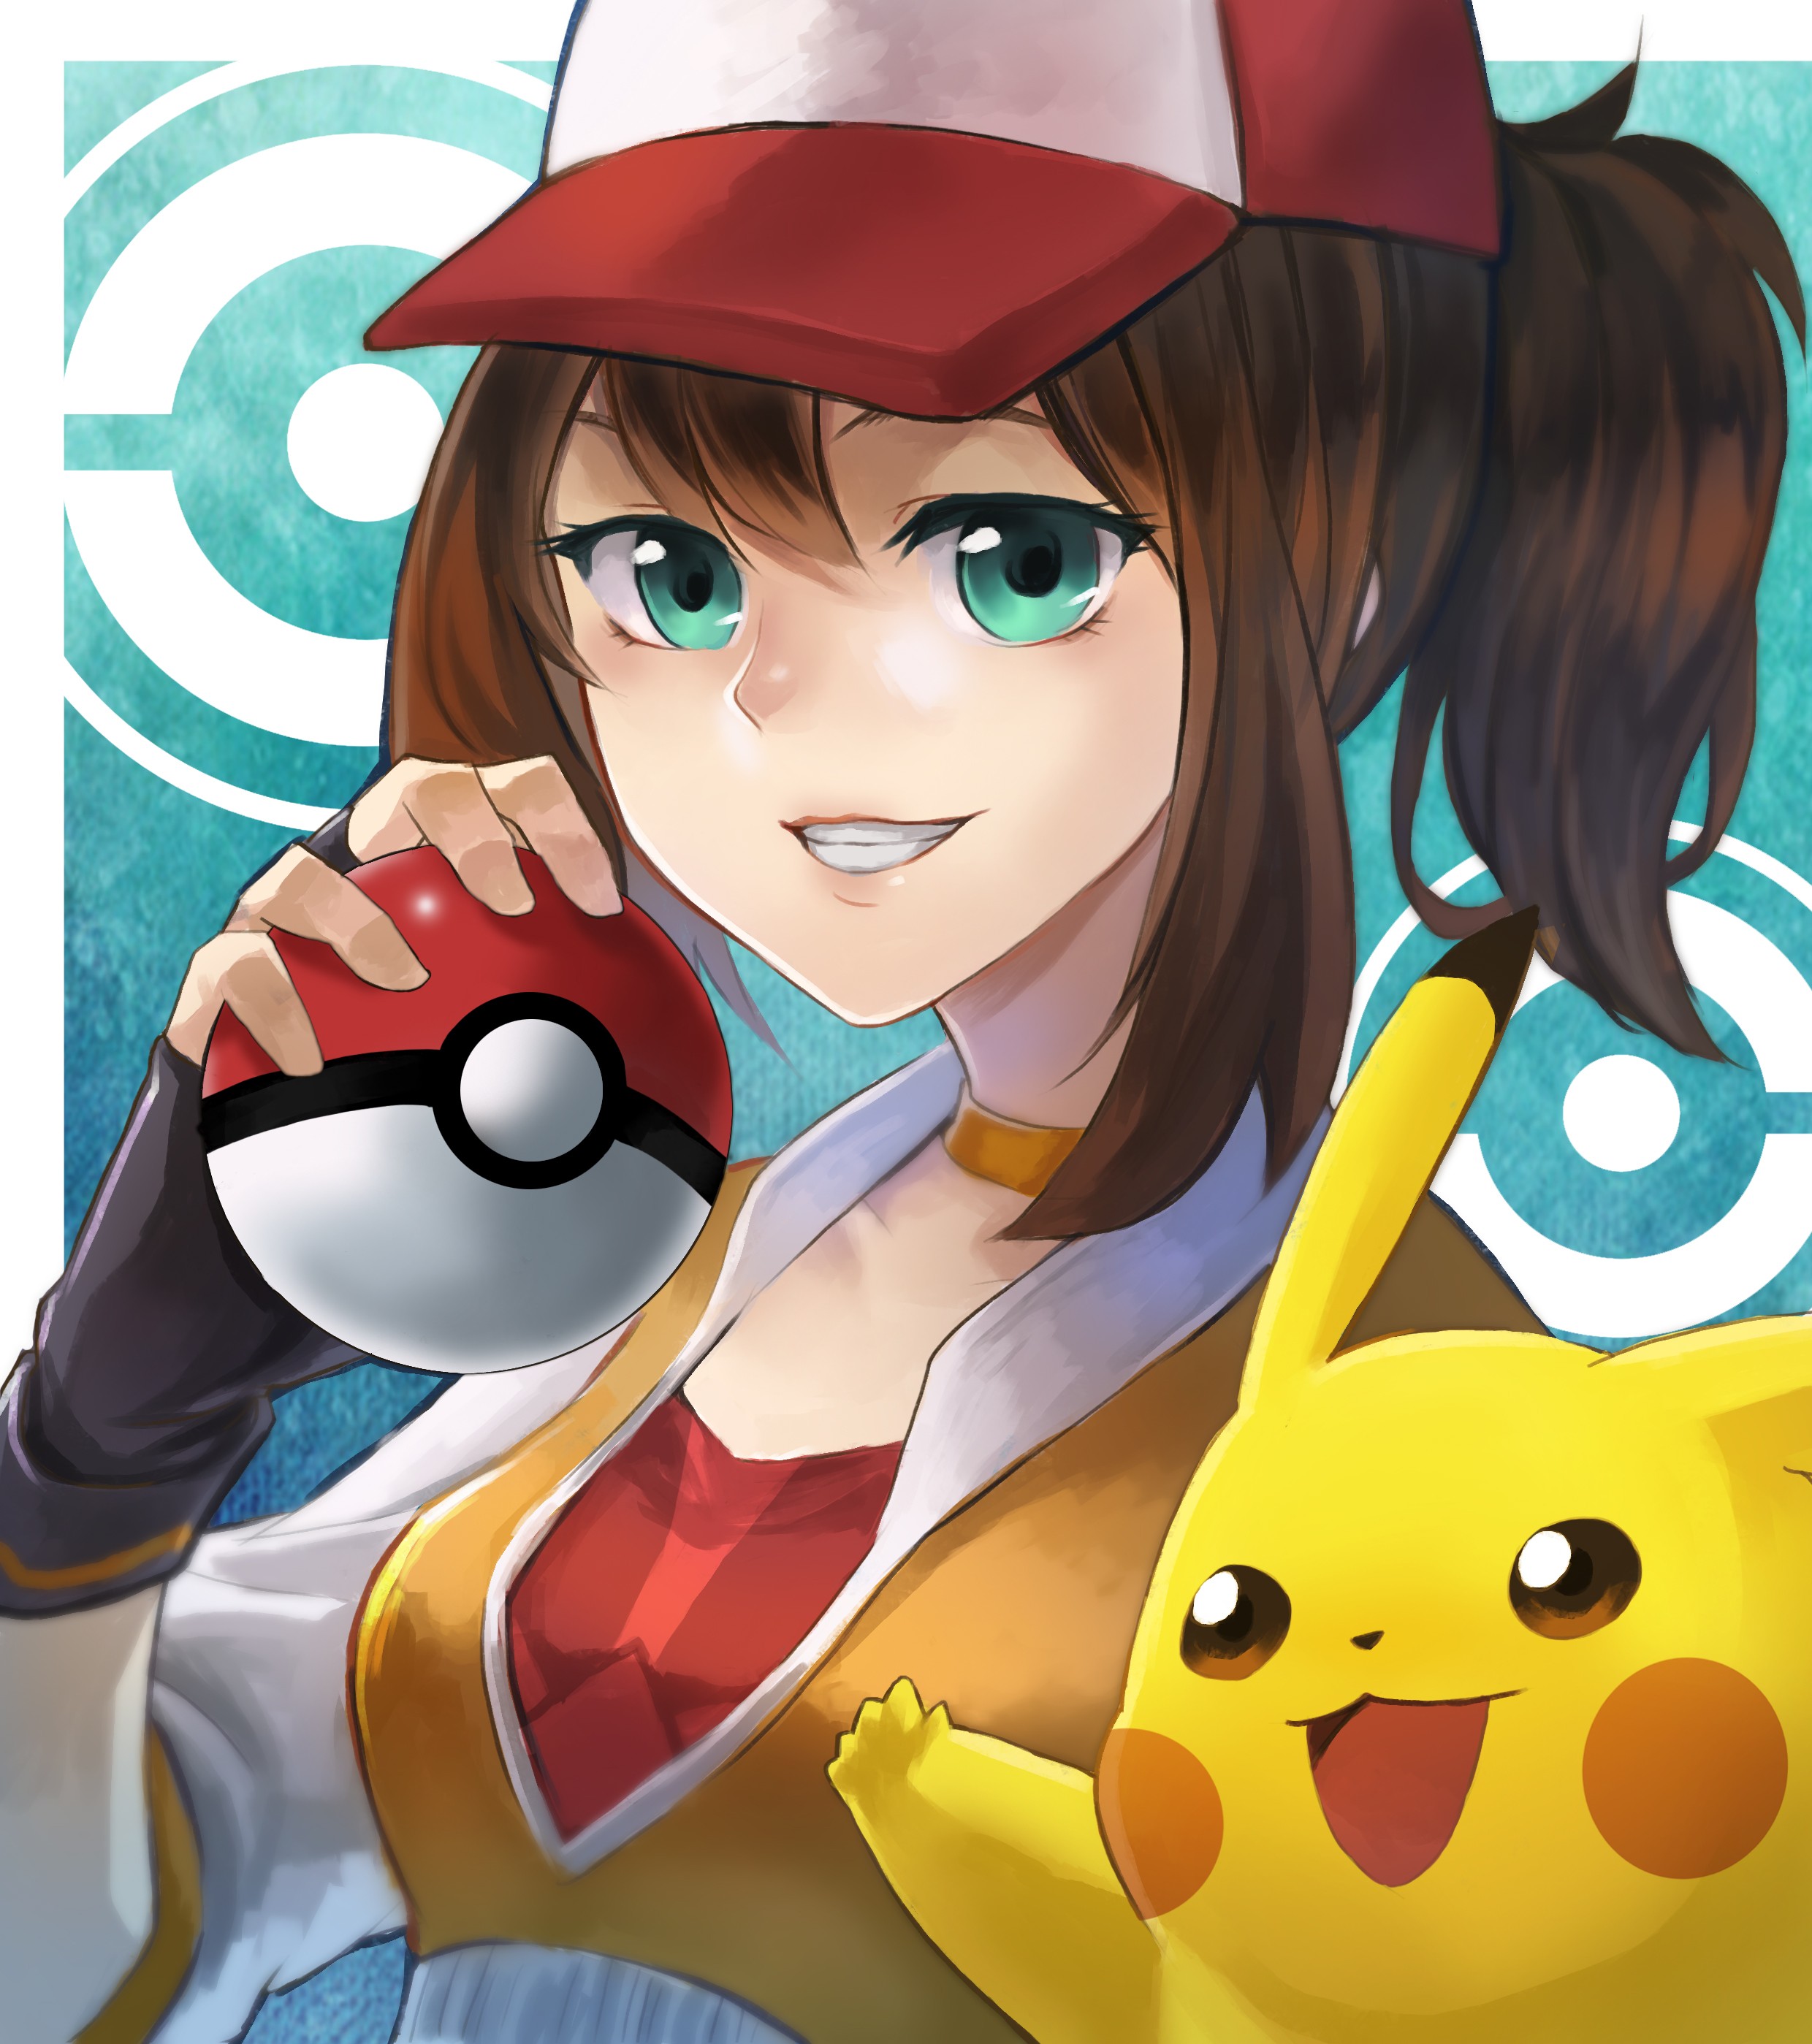 Anime 2480x2798 anime anime girls Pokémon Pokemon Go Pokémon trainers long hair brunette aqua eyes Pikachu baseball cap